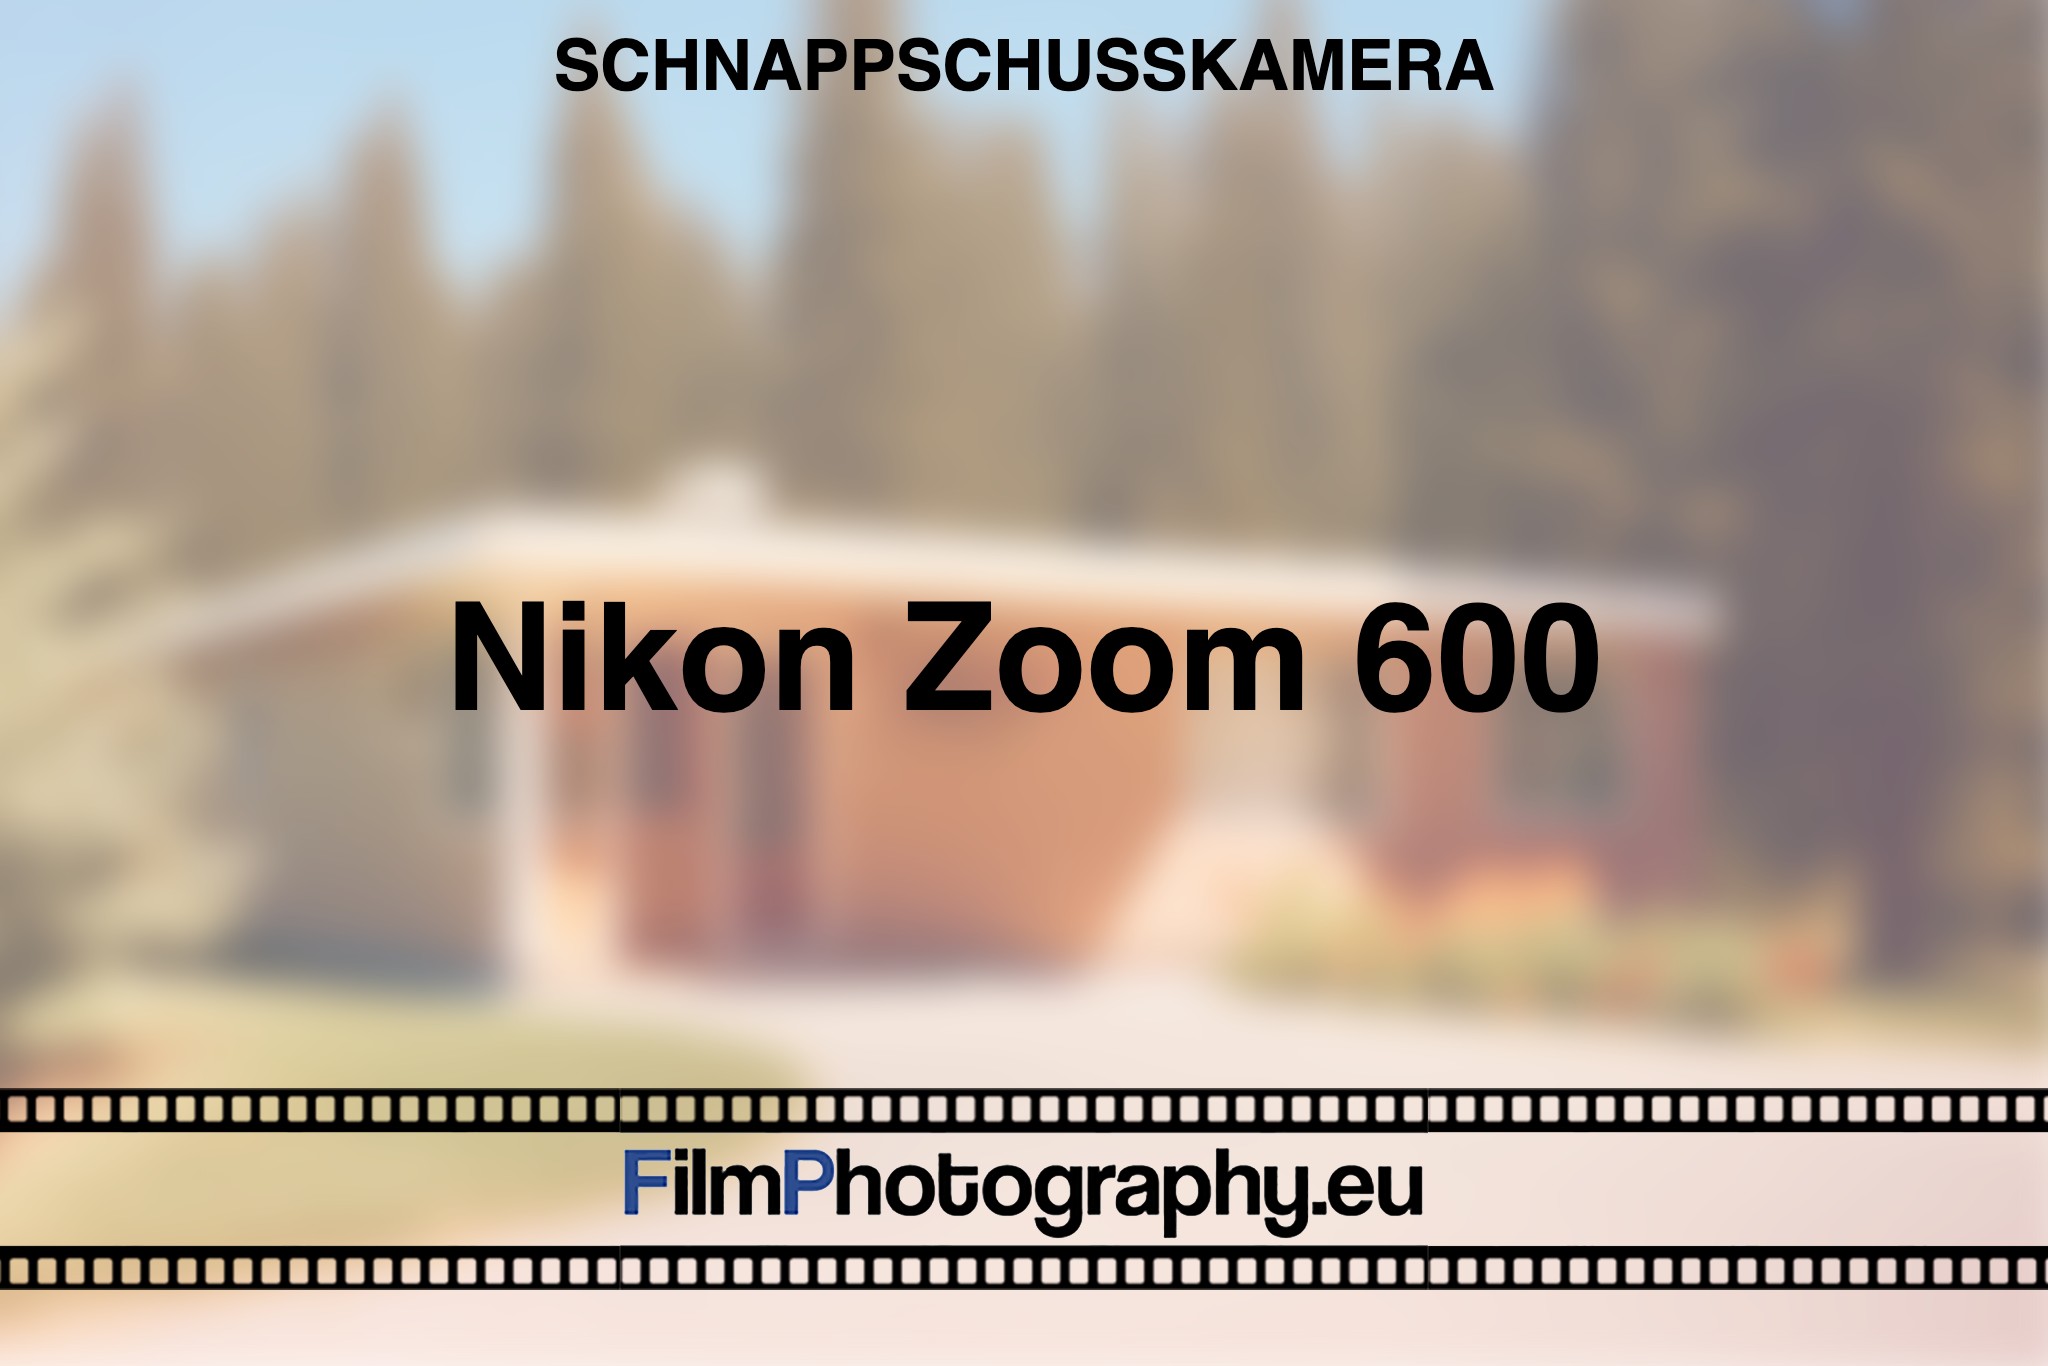 nikon-zoom-600-schnappschusskamera-bnv